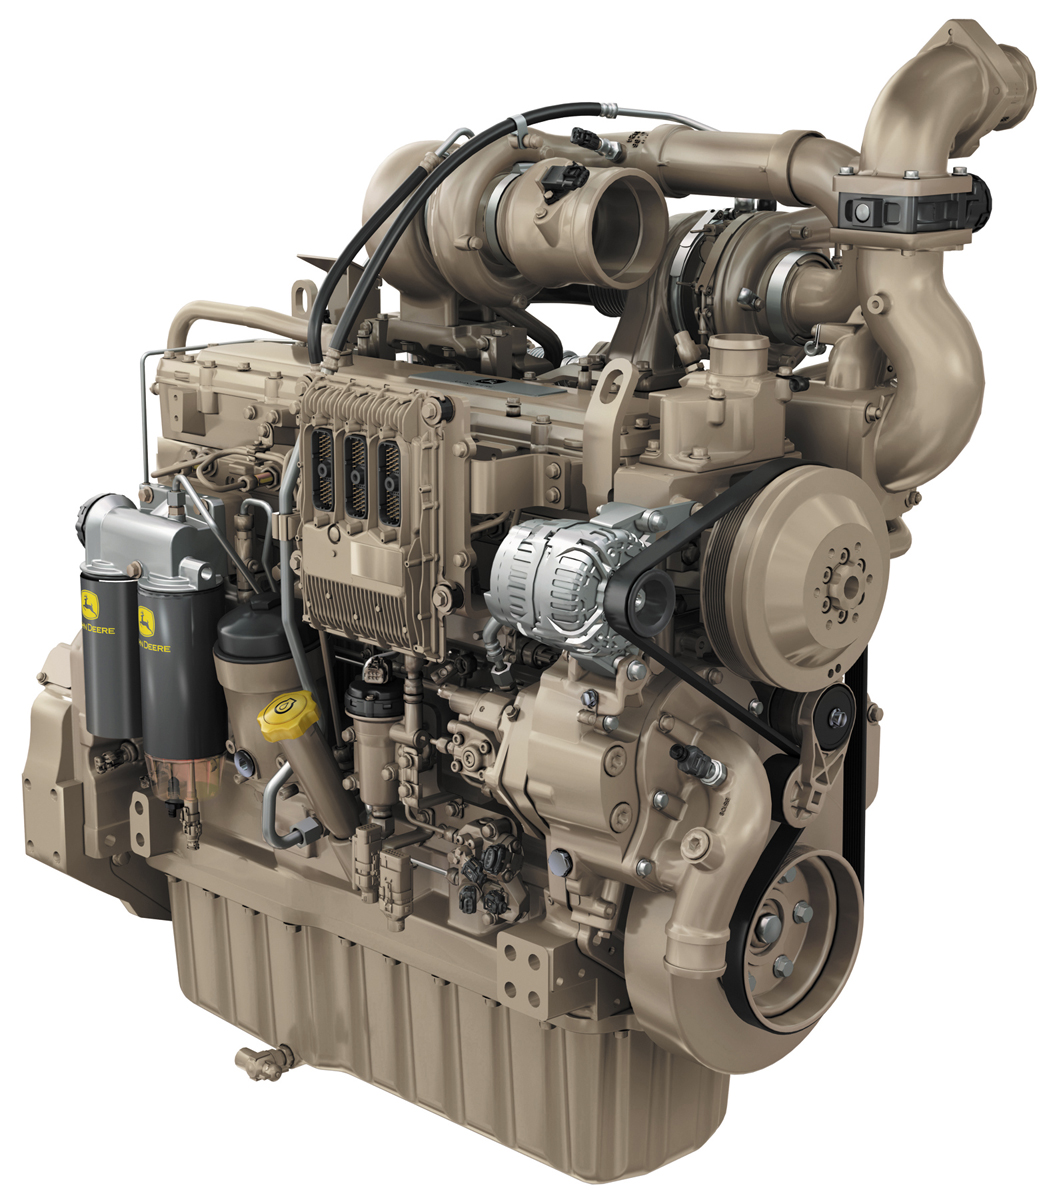 John Deere Power Systems shows entire Interim Tier 4/Stage III B diesel engine lineup